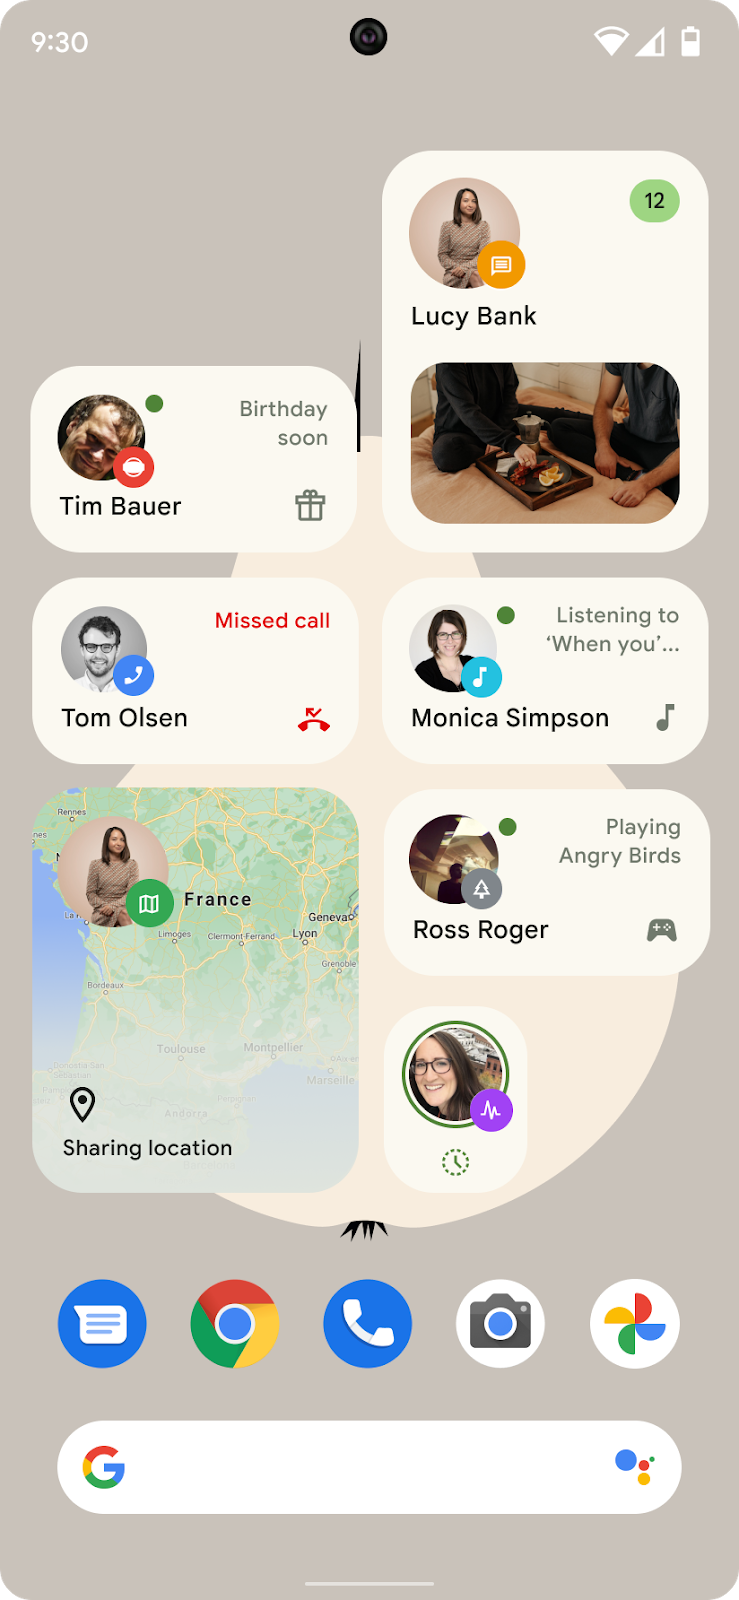 Conversations displayed in Conversation widgets